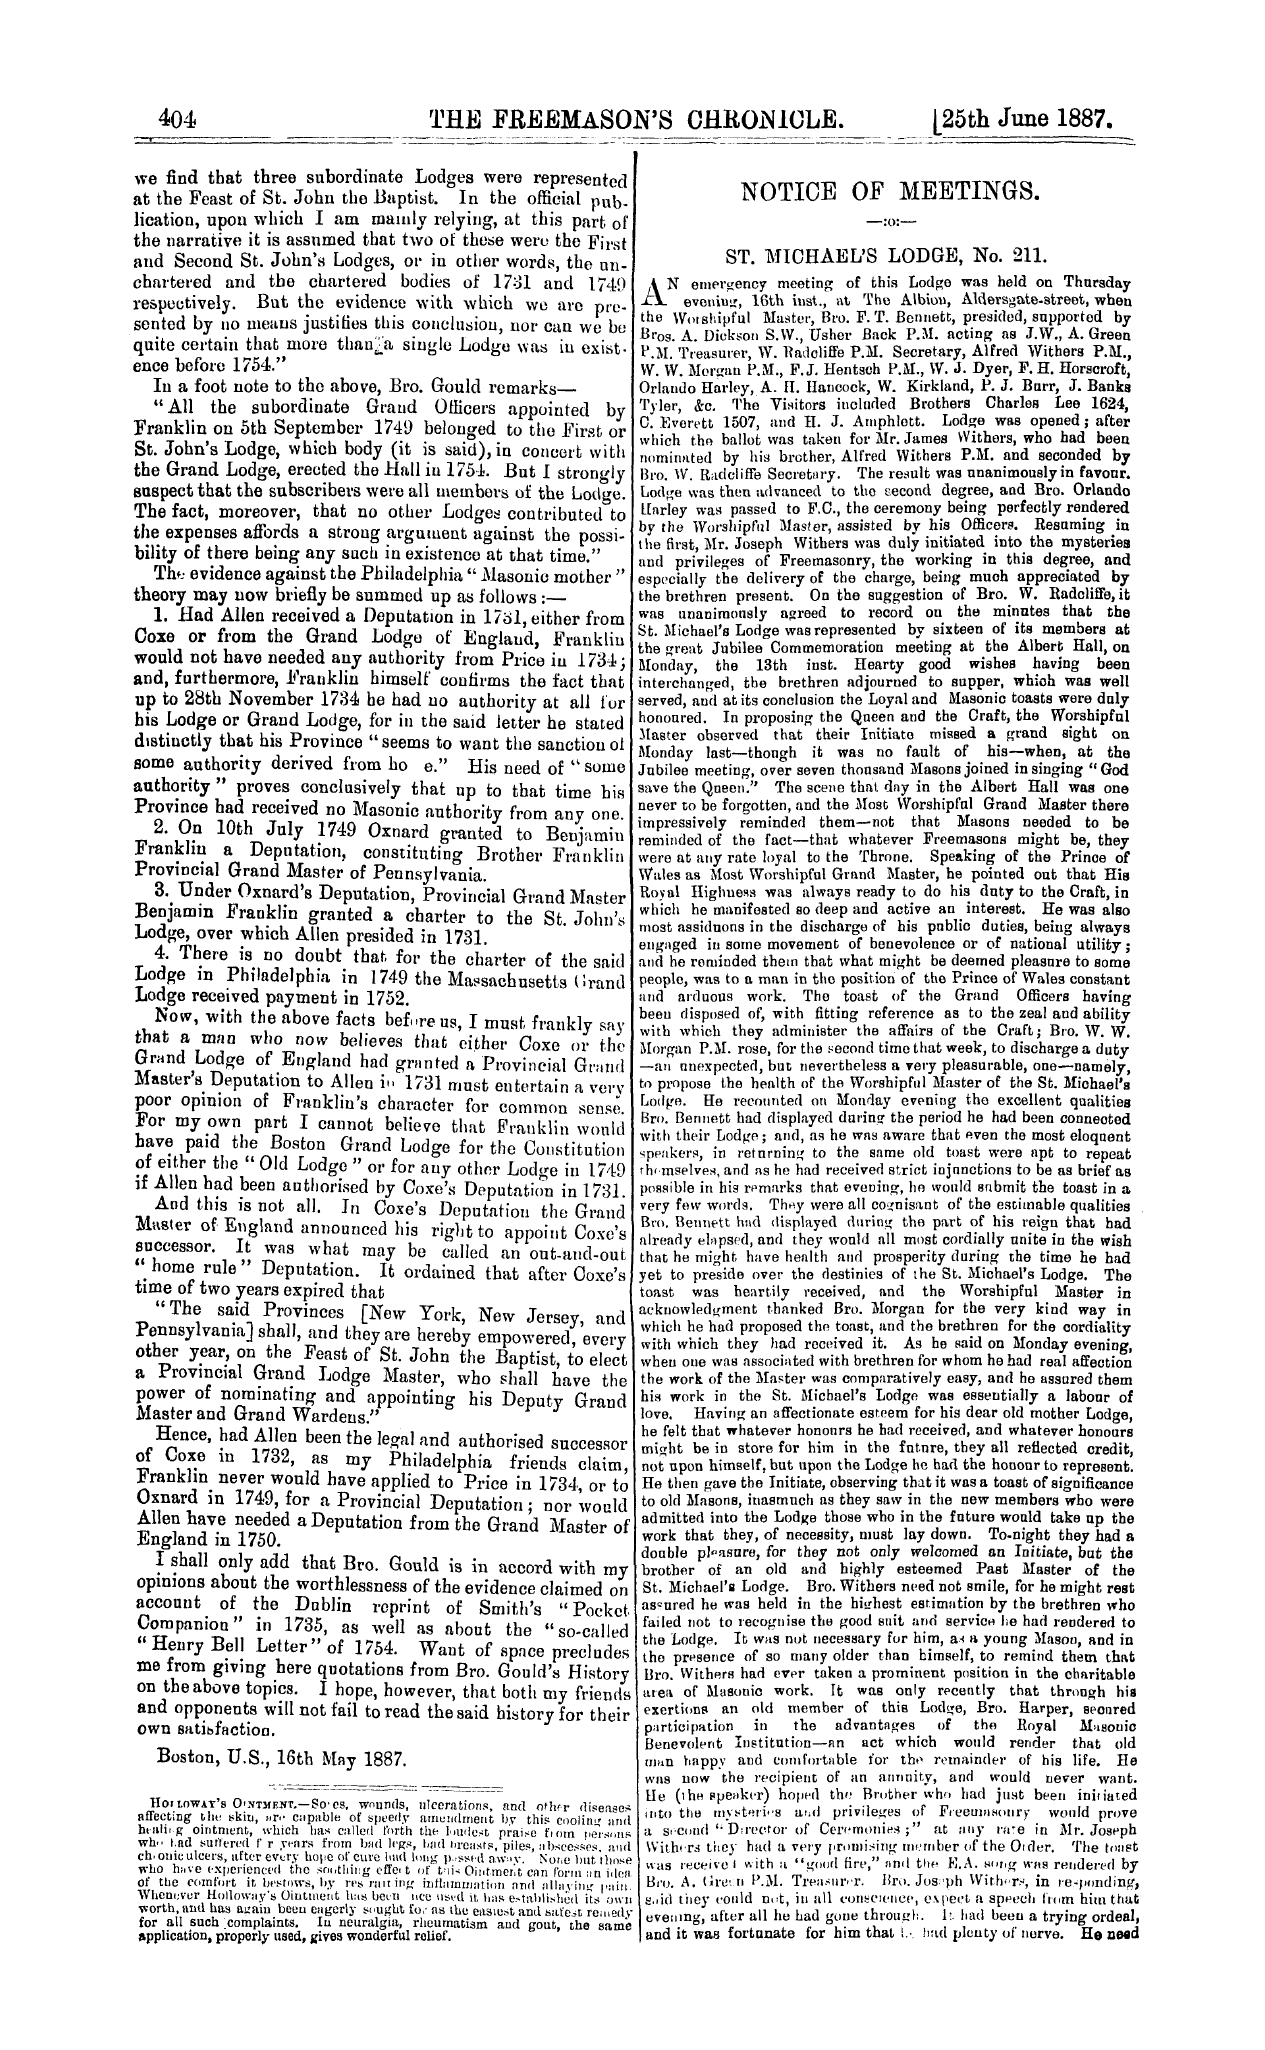 The Freemason's Chronicle: 1887-06-25 - Notice Of Meetings.